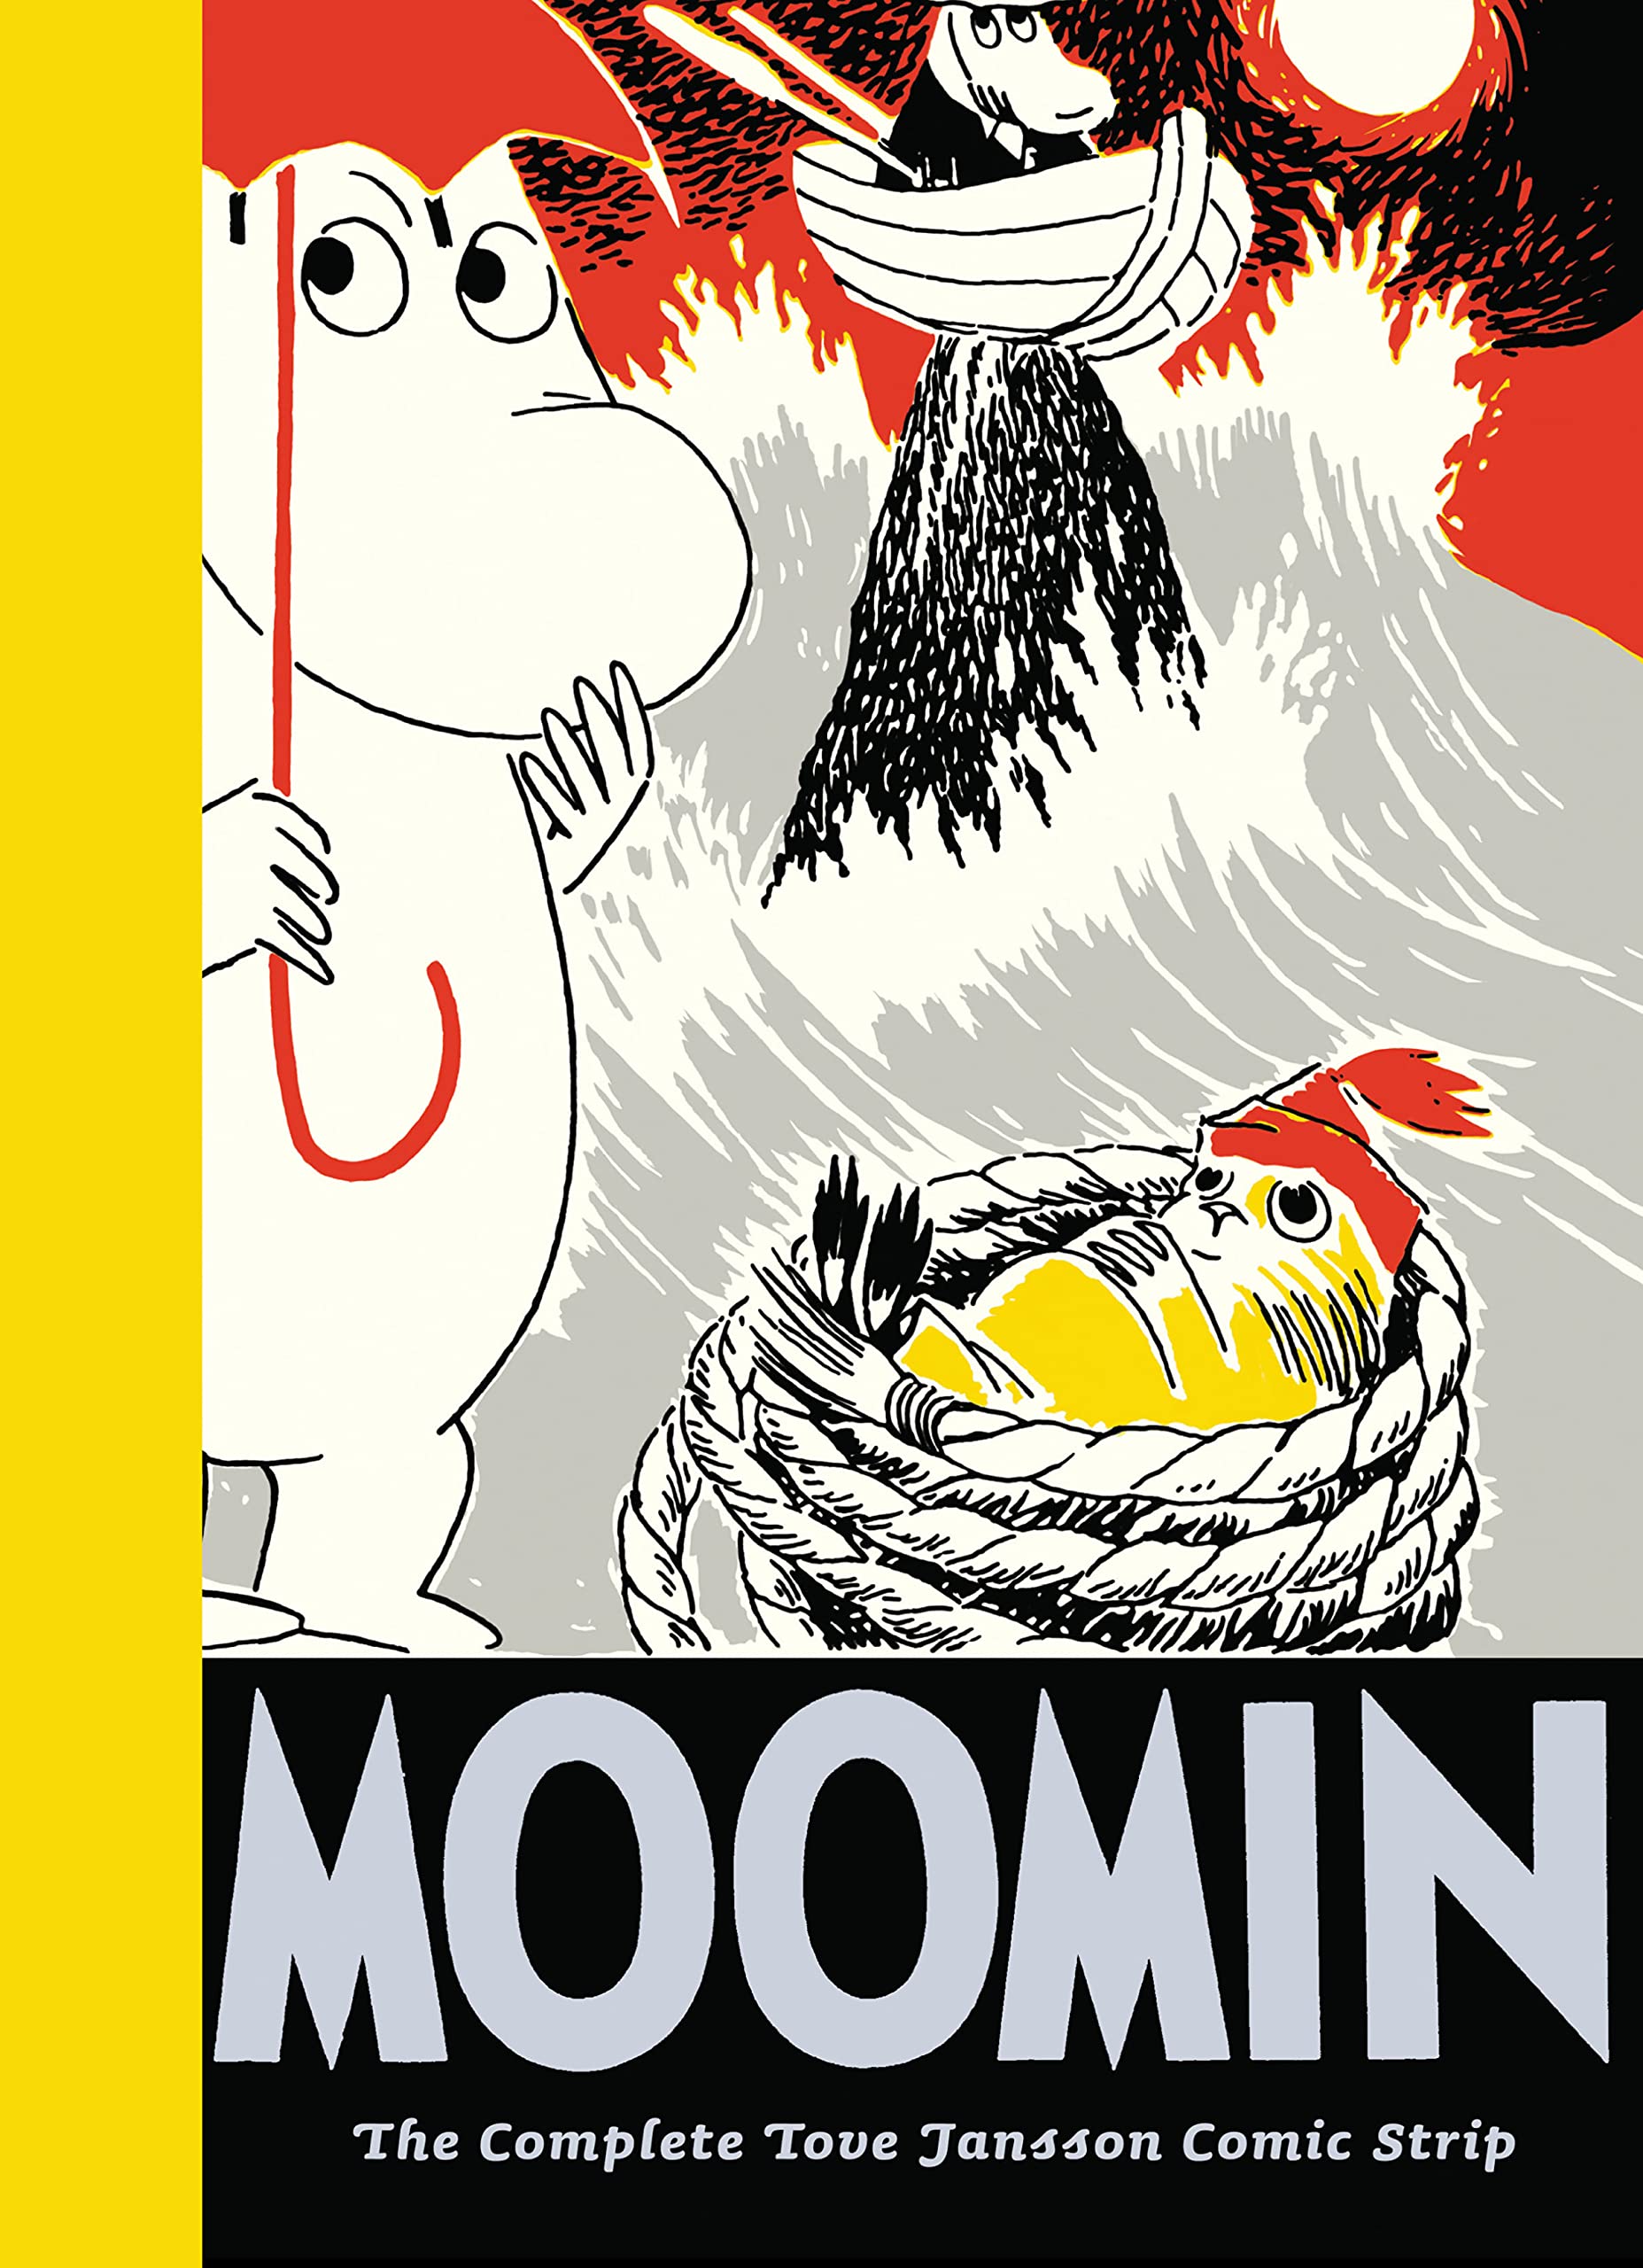 Moomin Vol. 4: The Complete Tove Jansson Comic Strip